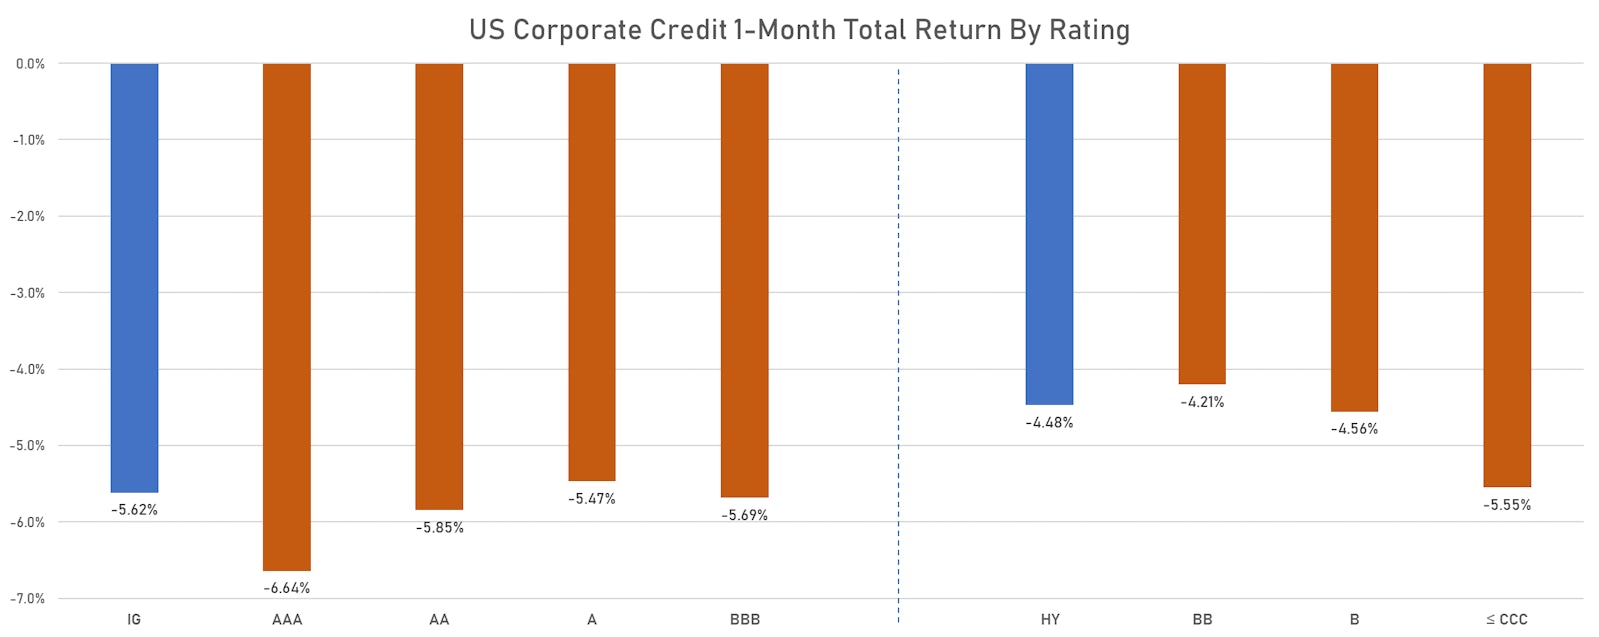 ICE BofAML US Corporate Credit Total Returns | Sources: ϕpost, FactSet data